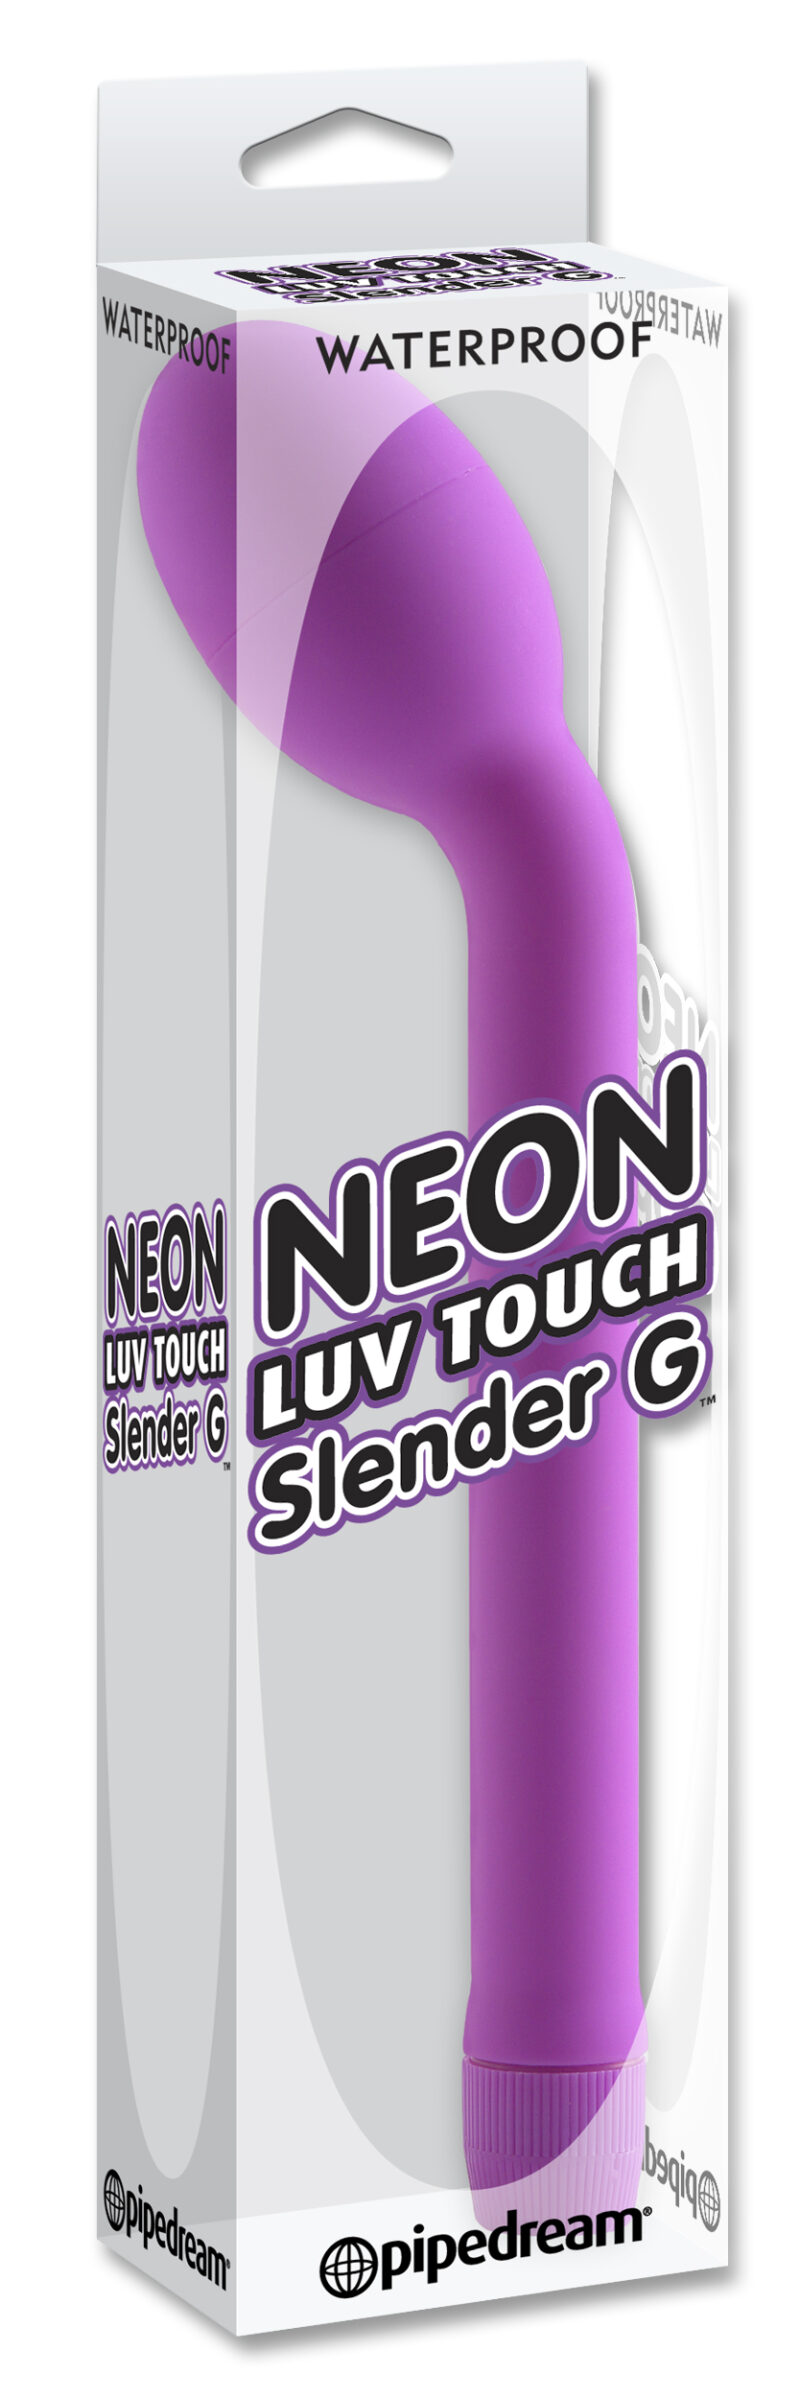 Pipedream Neon Luv Touch Slender G Vibrator Purple